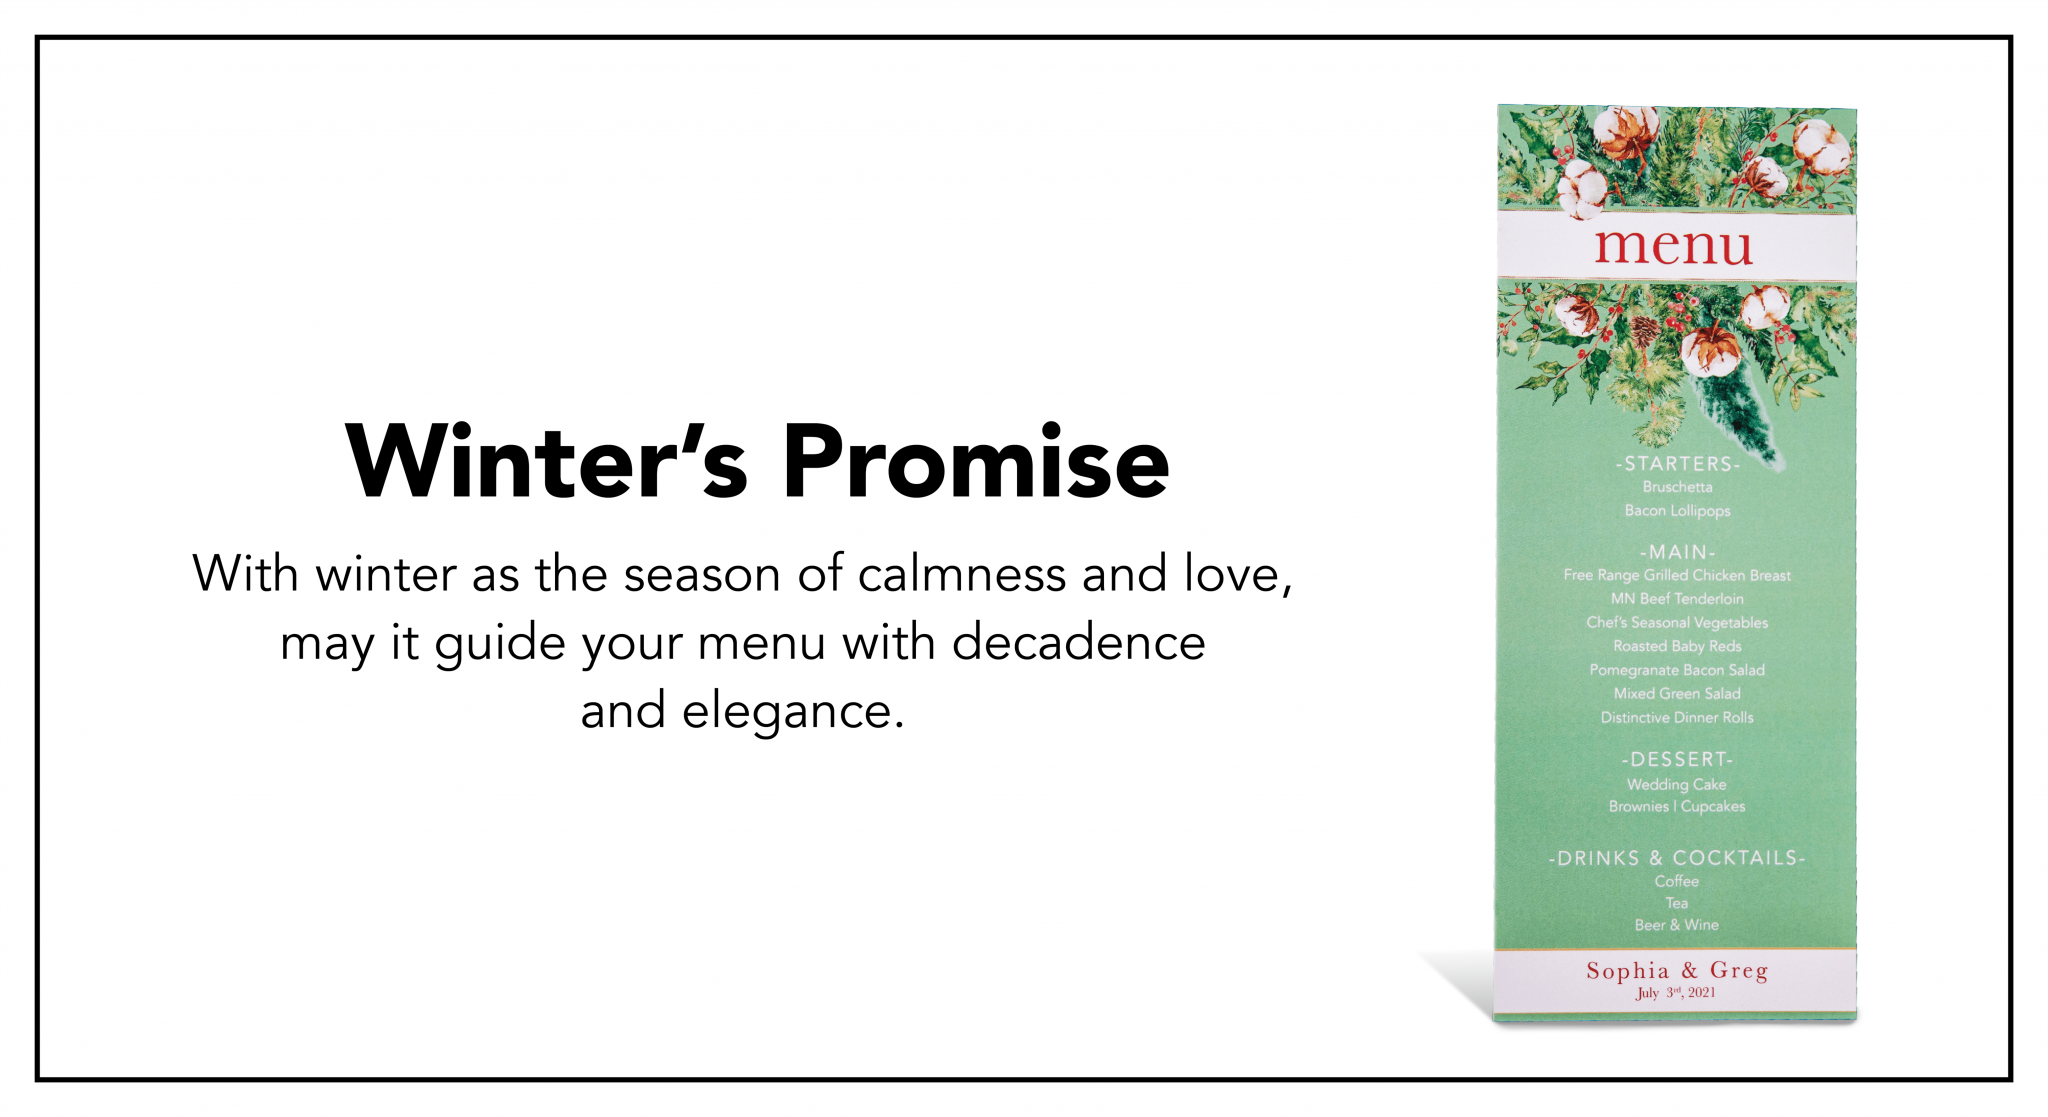 WINTER'S PROMISE